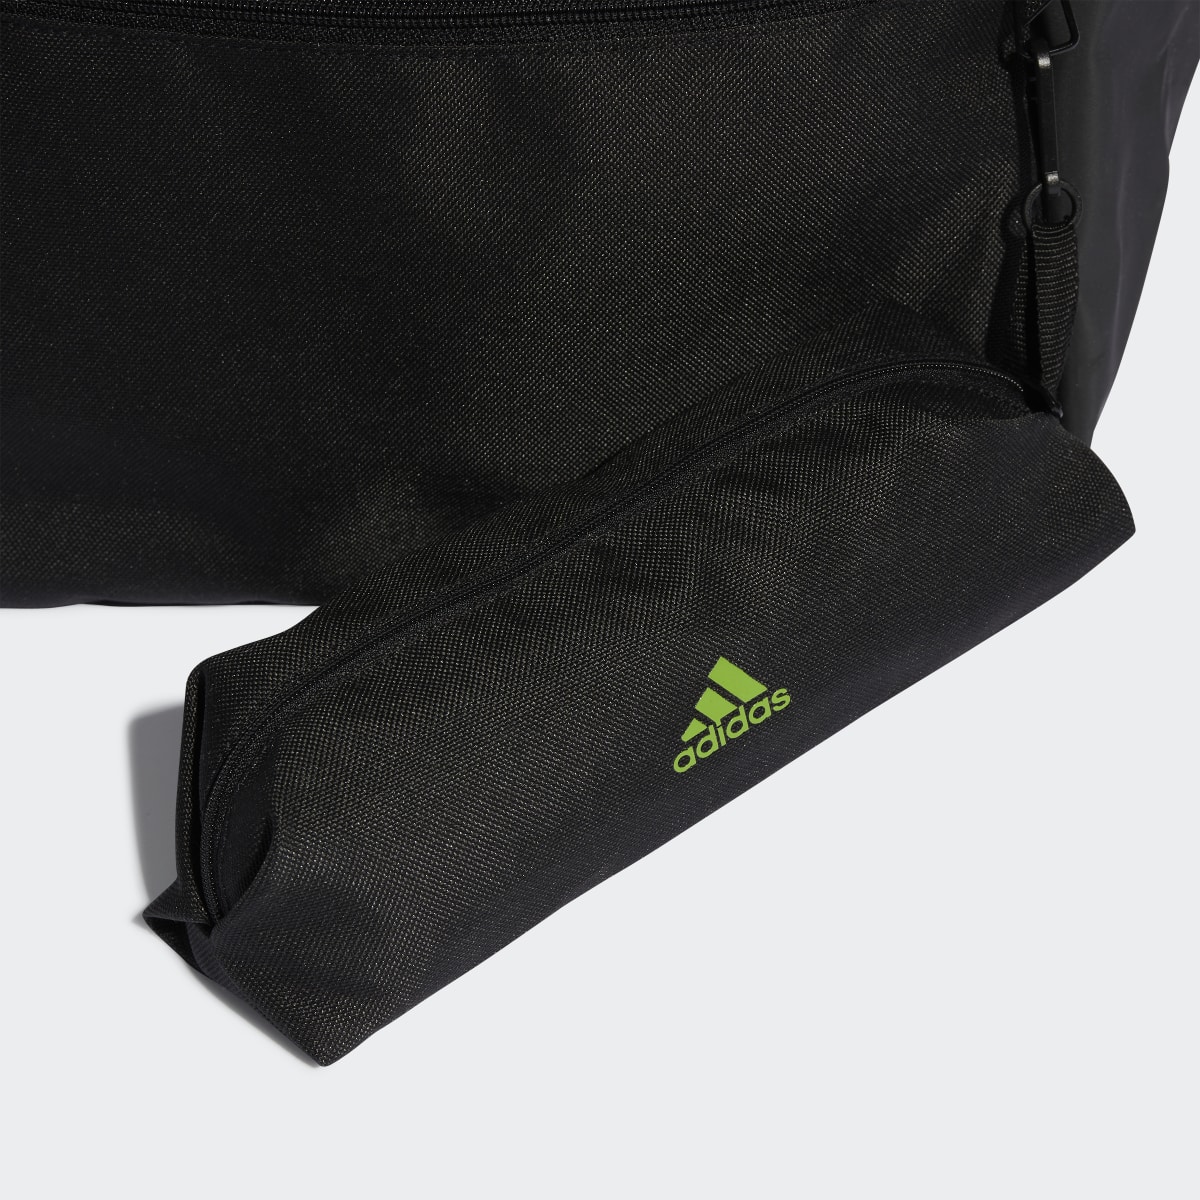 Adidas Classic Horizontal 3-Stripes Backpack. 7